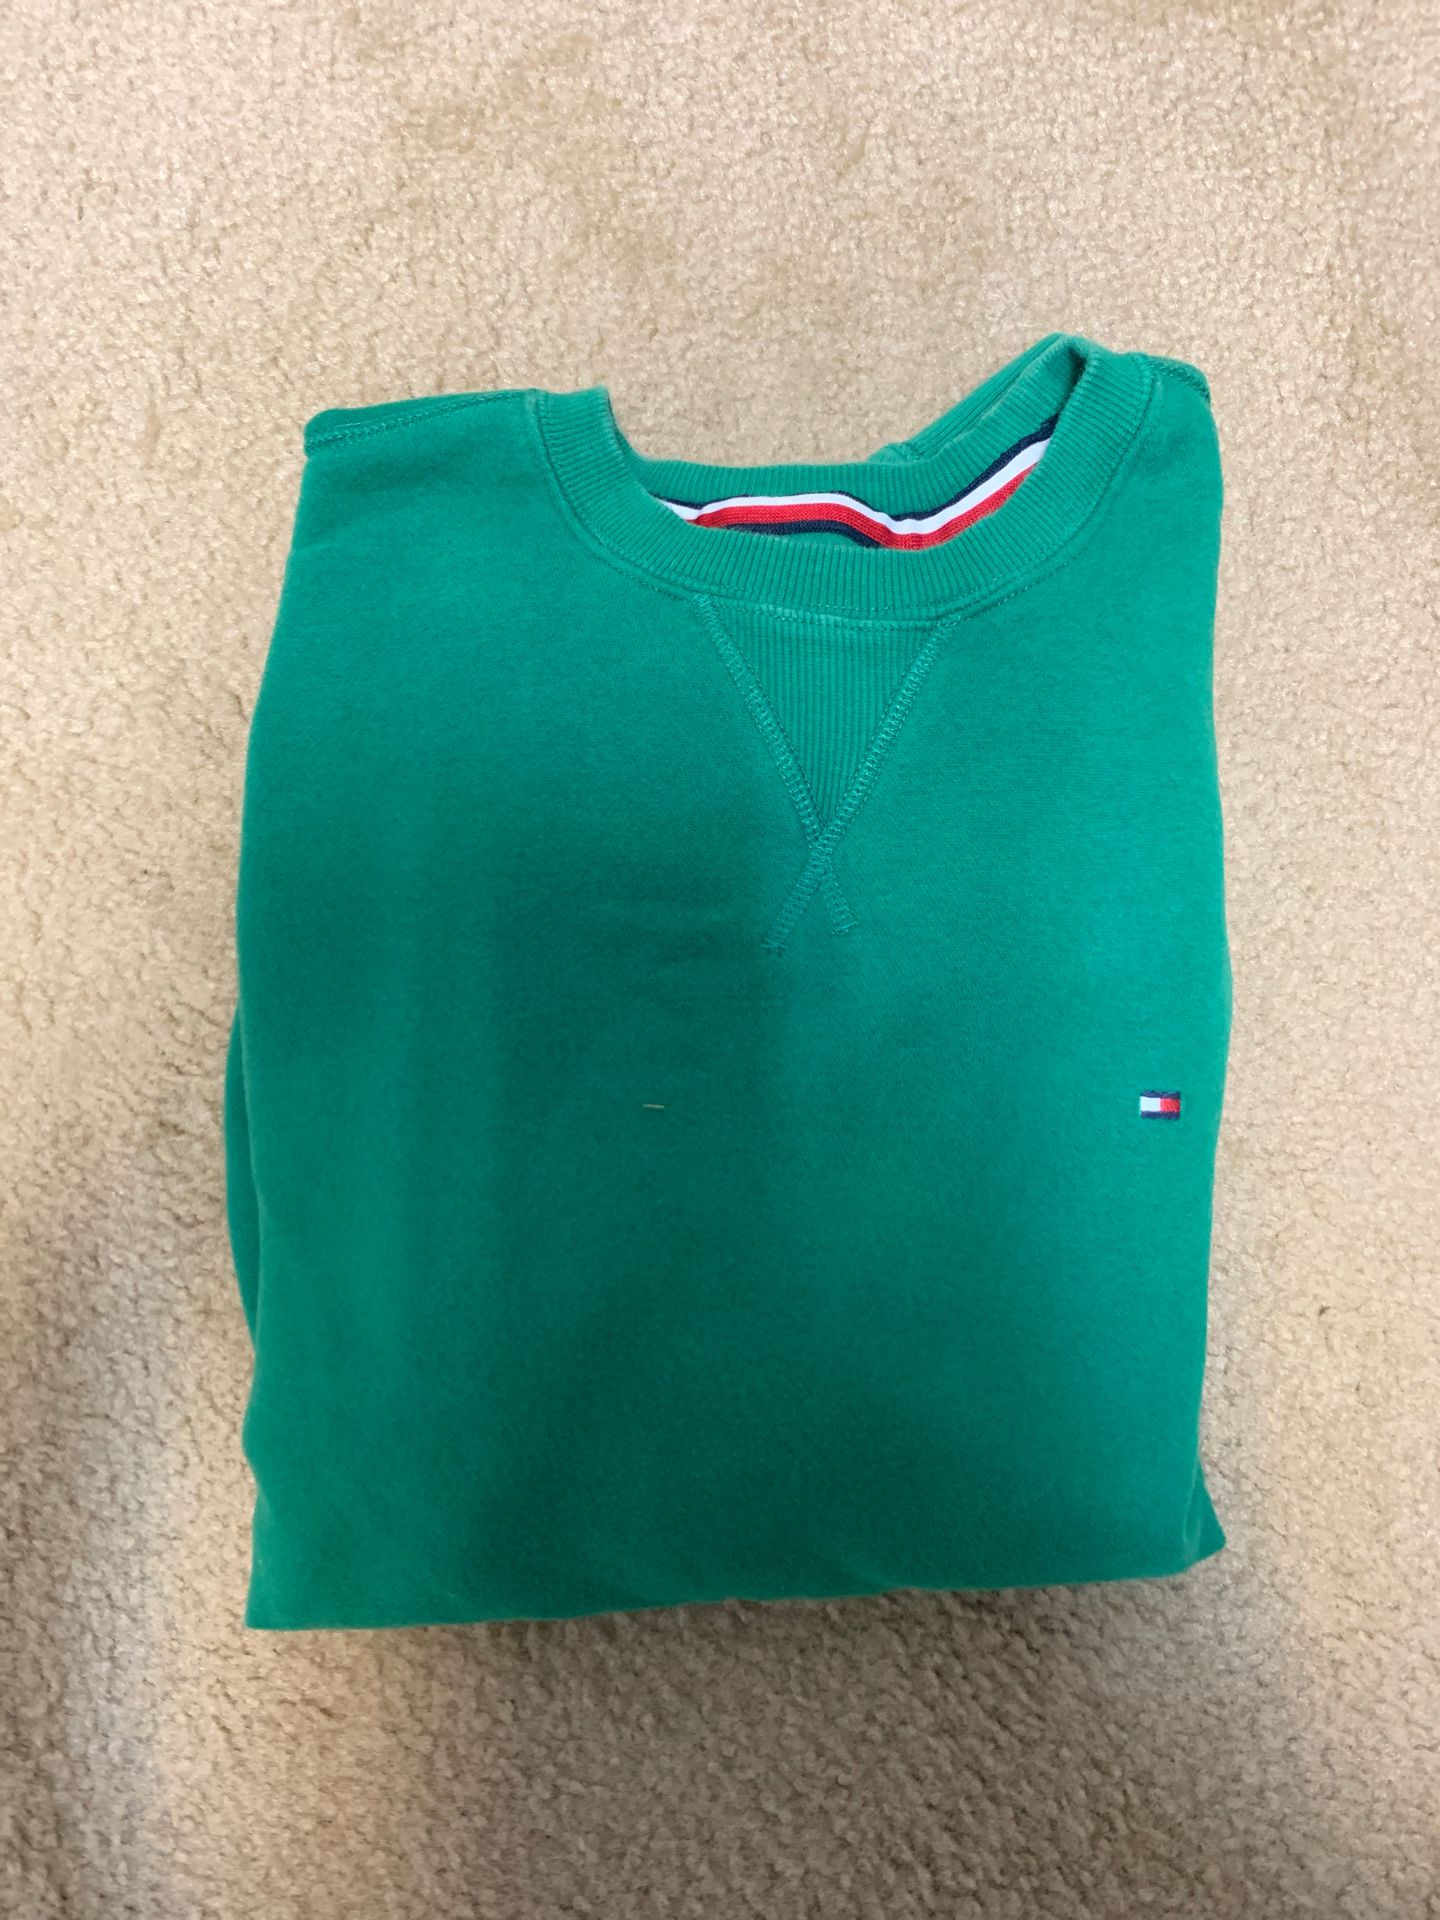 Men’s Tommy Hilfiger Sweatshirt-Size L